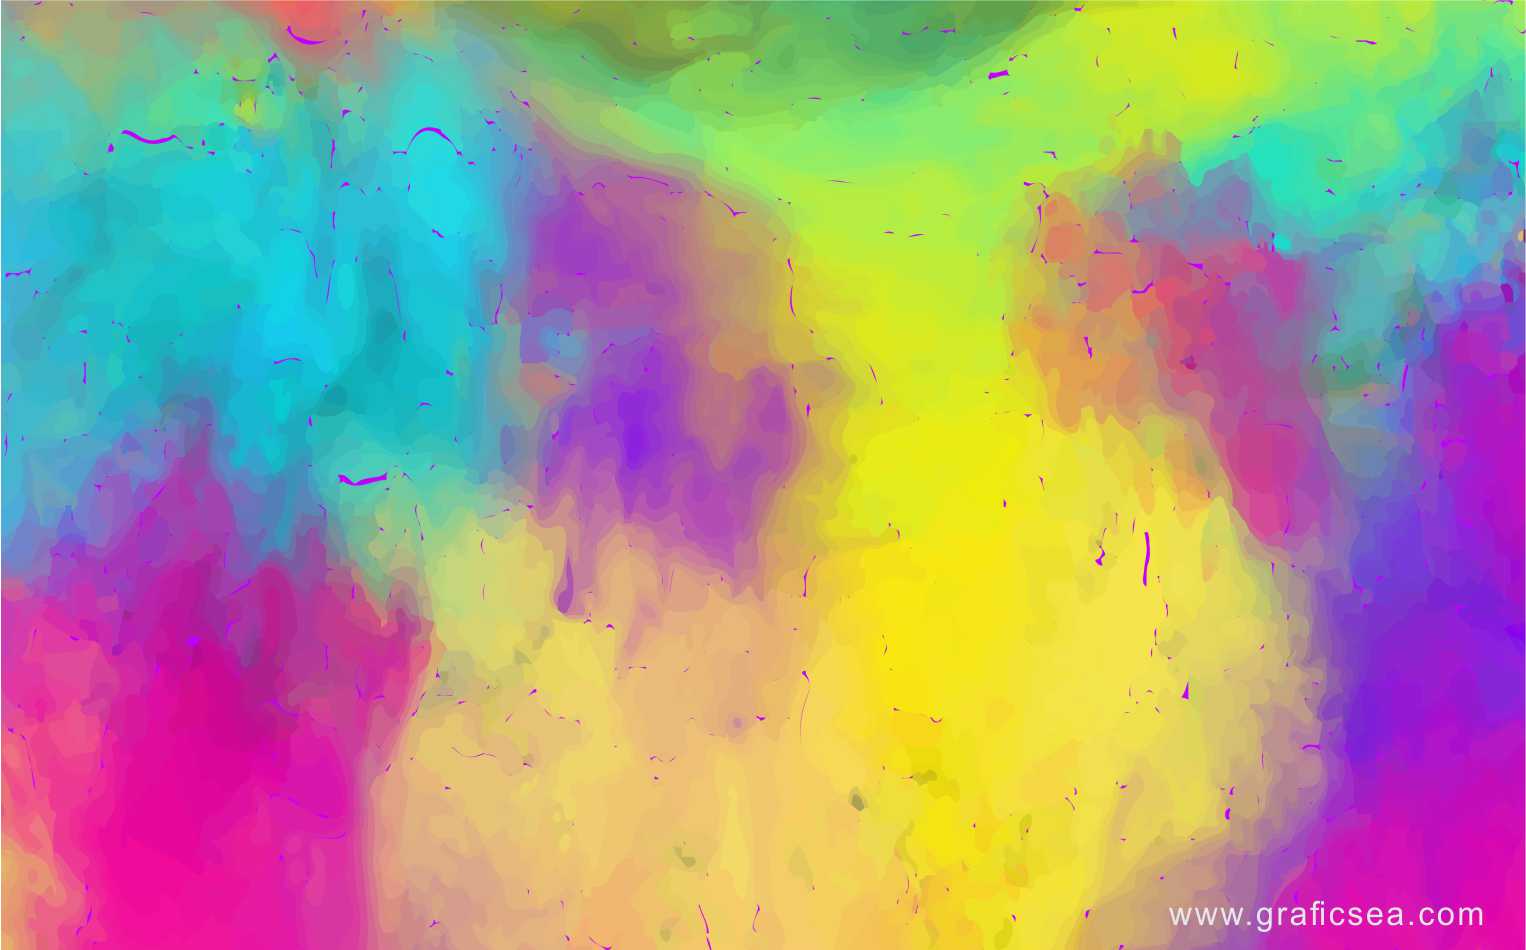 Cool Multicolors Background flex design image free